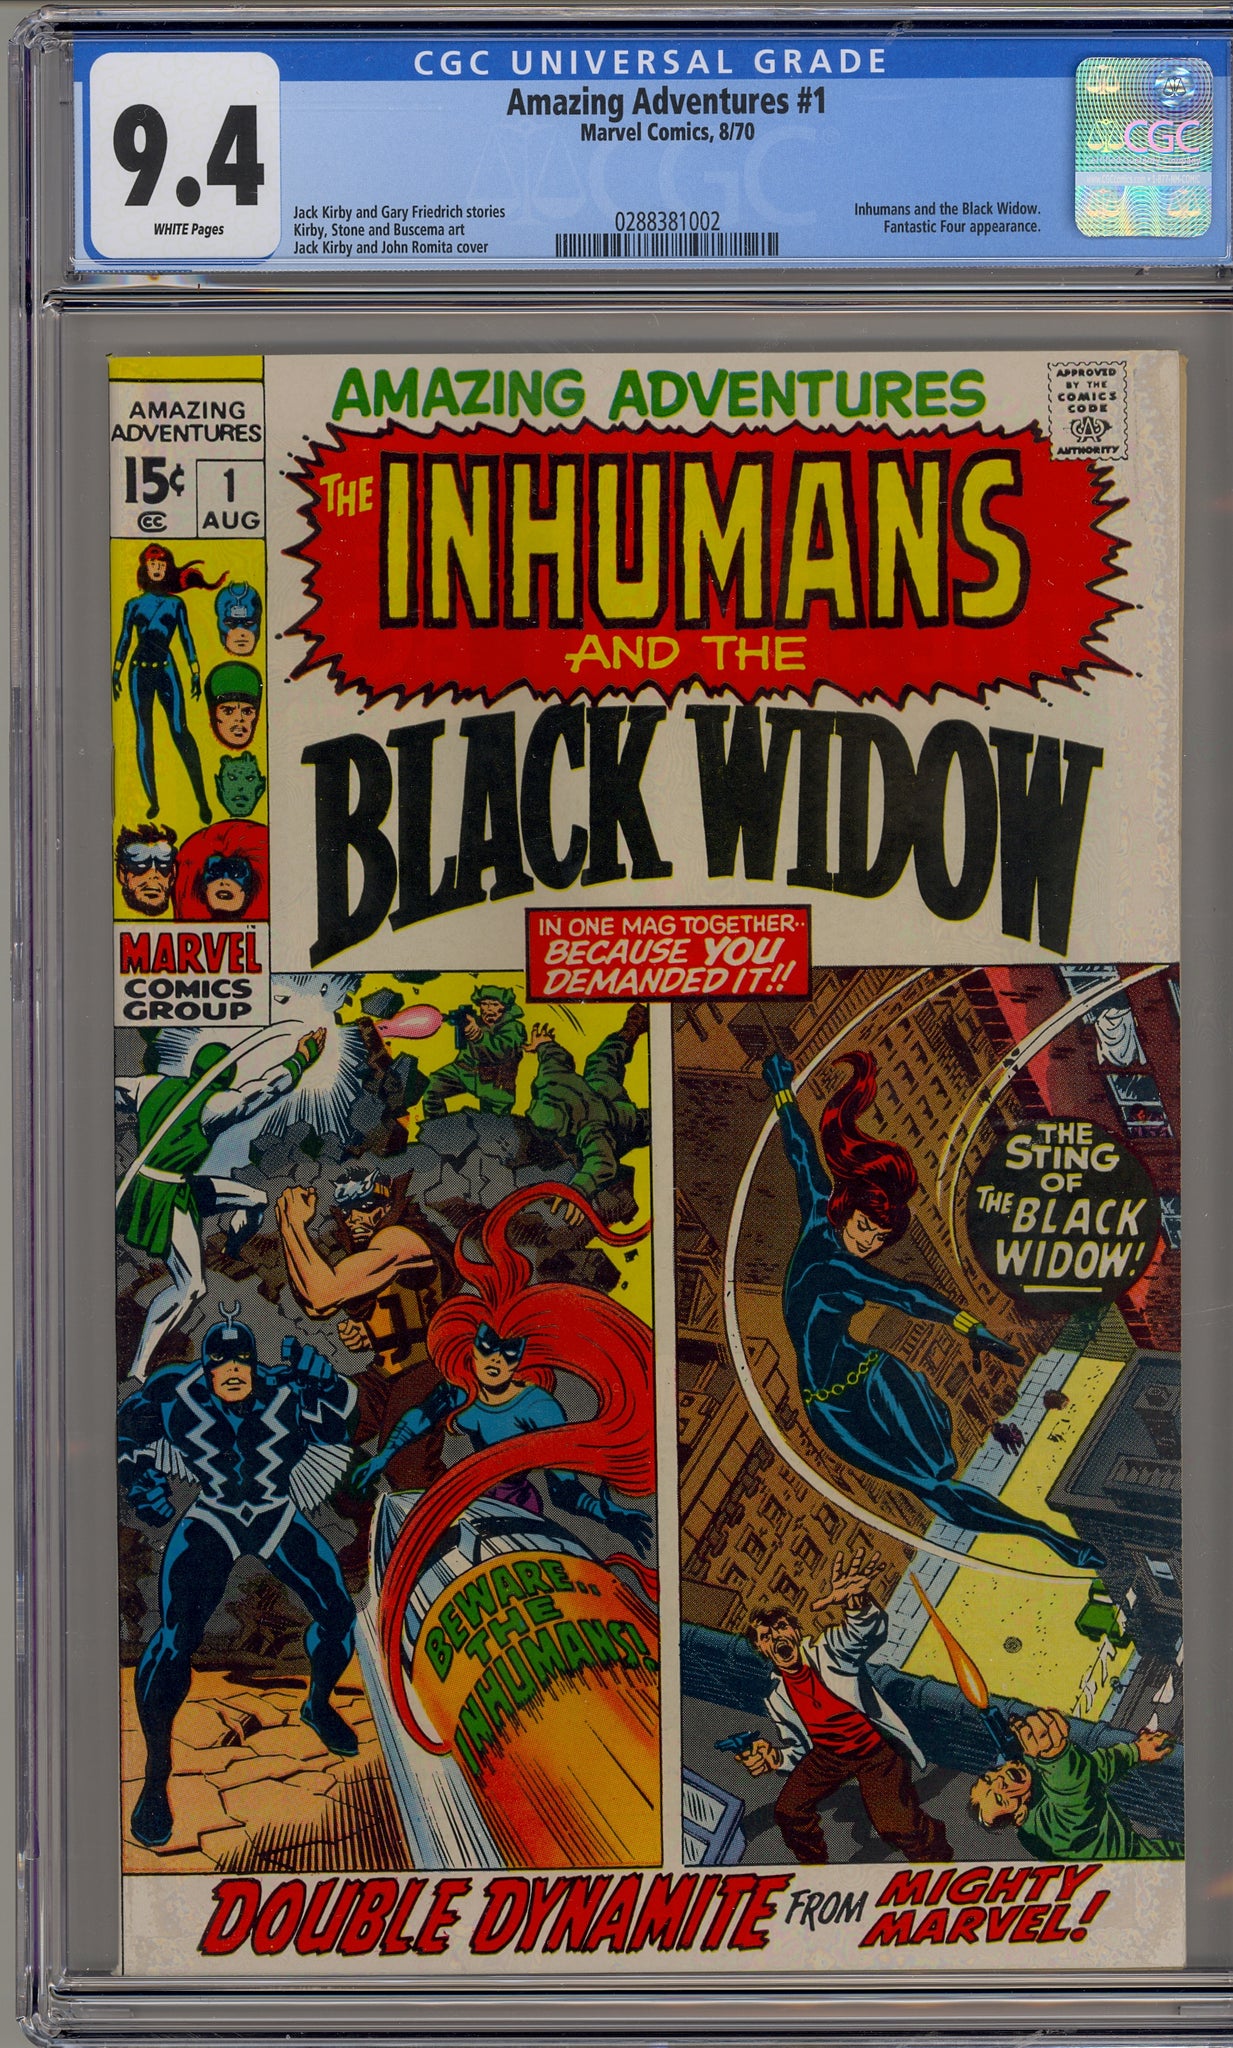 Amazing Adventures #1 (1970) Black Widow and Inhumans